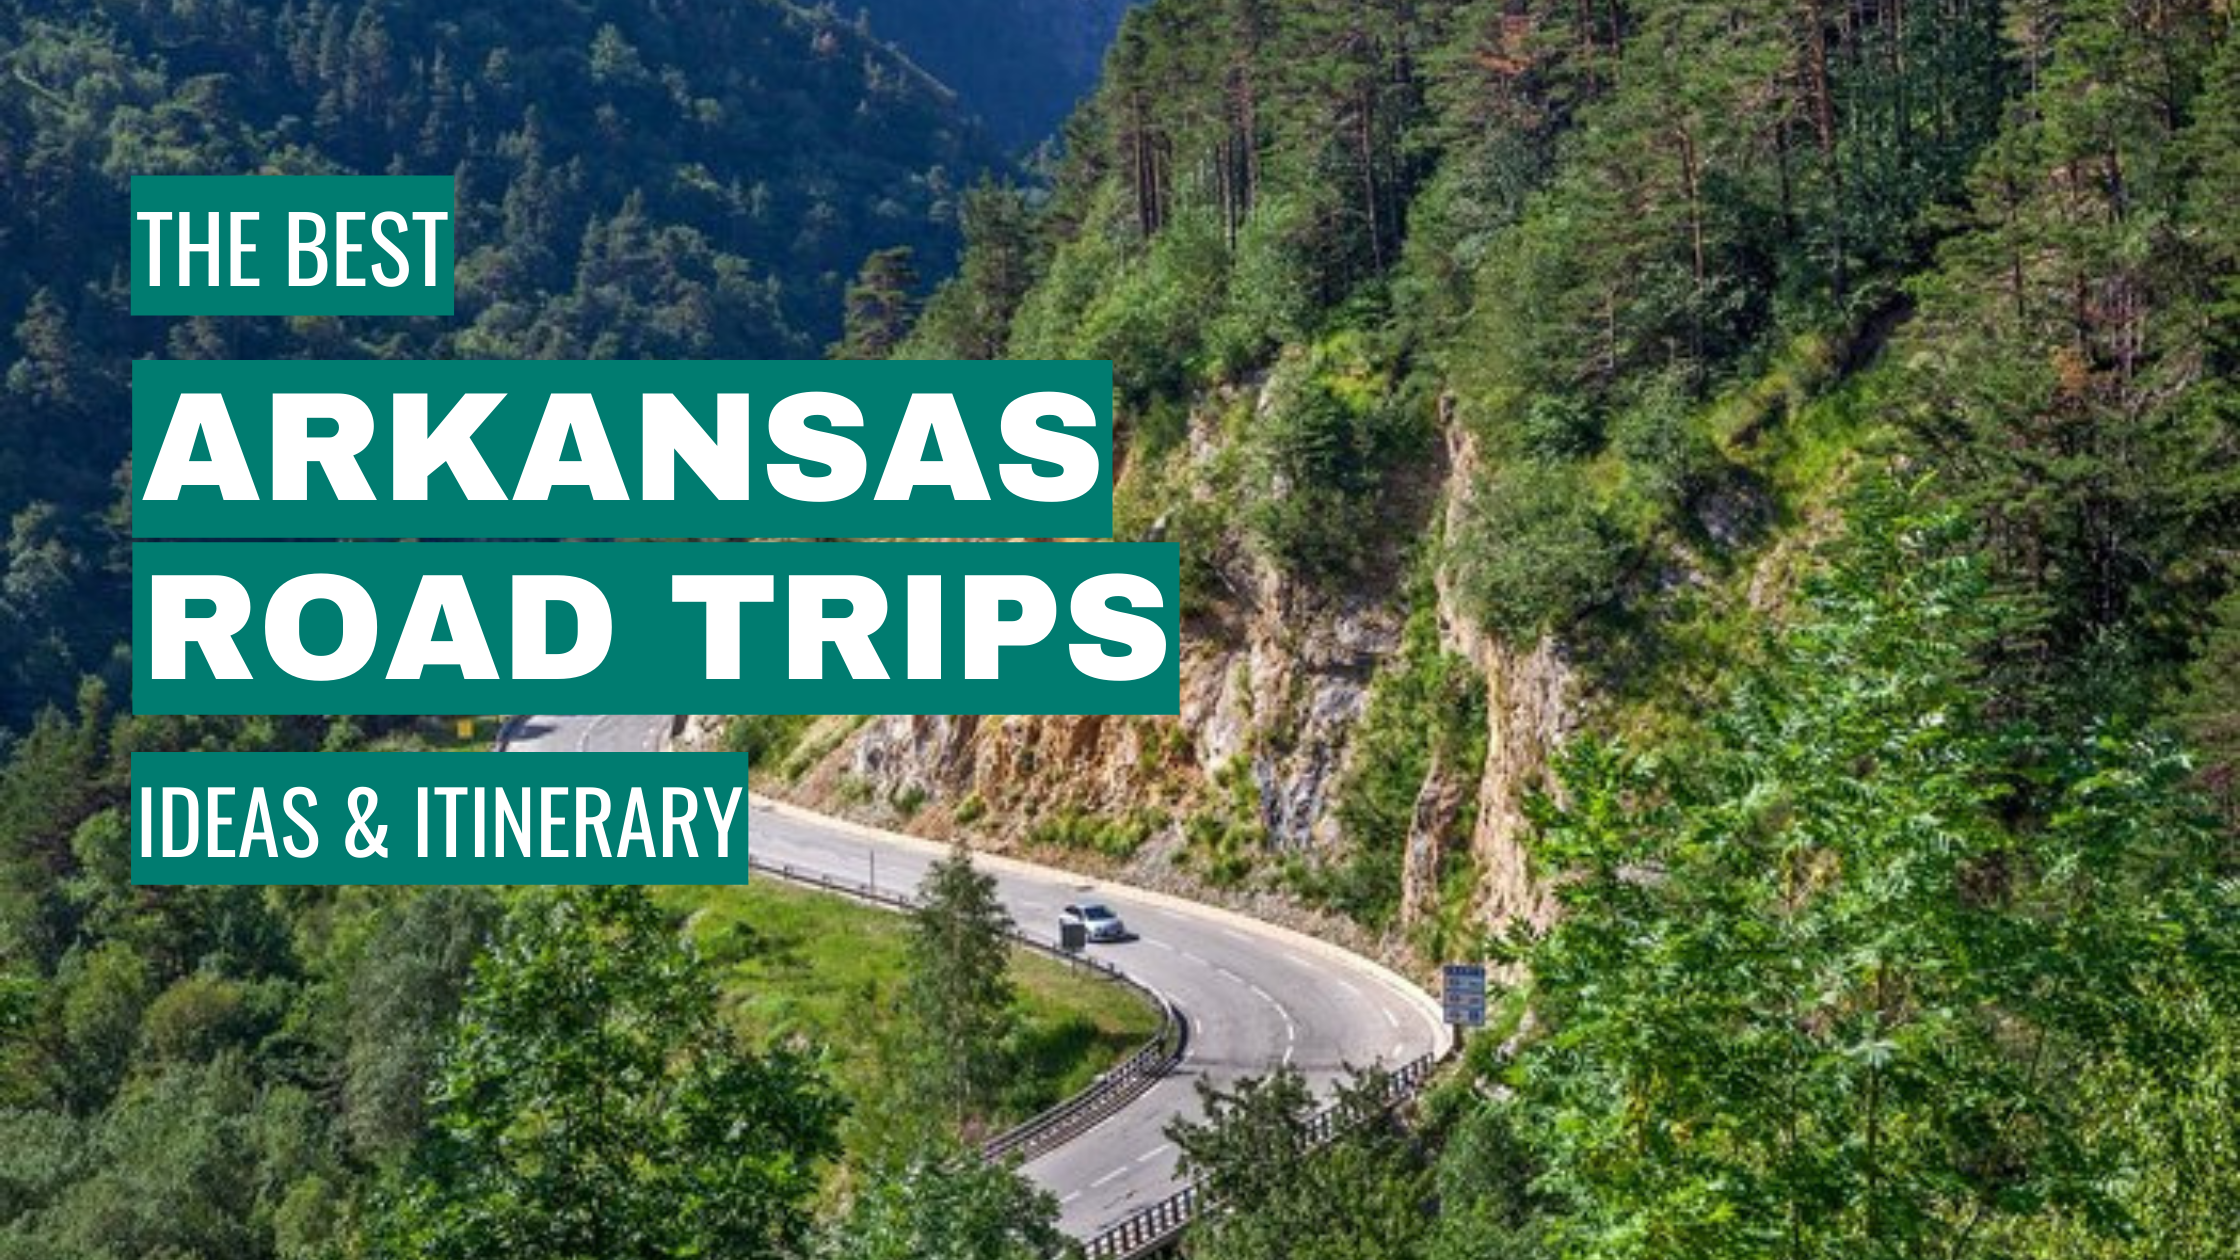 Arkansas Road Trip Ideas: 11 Best Road Trips + Itinerary